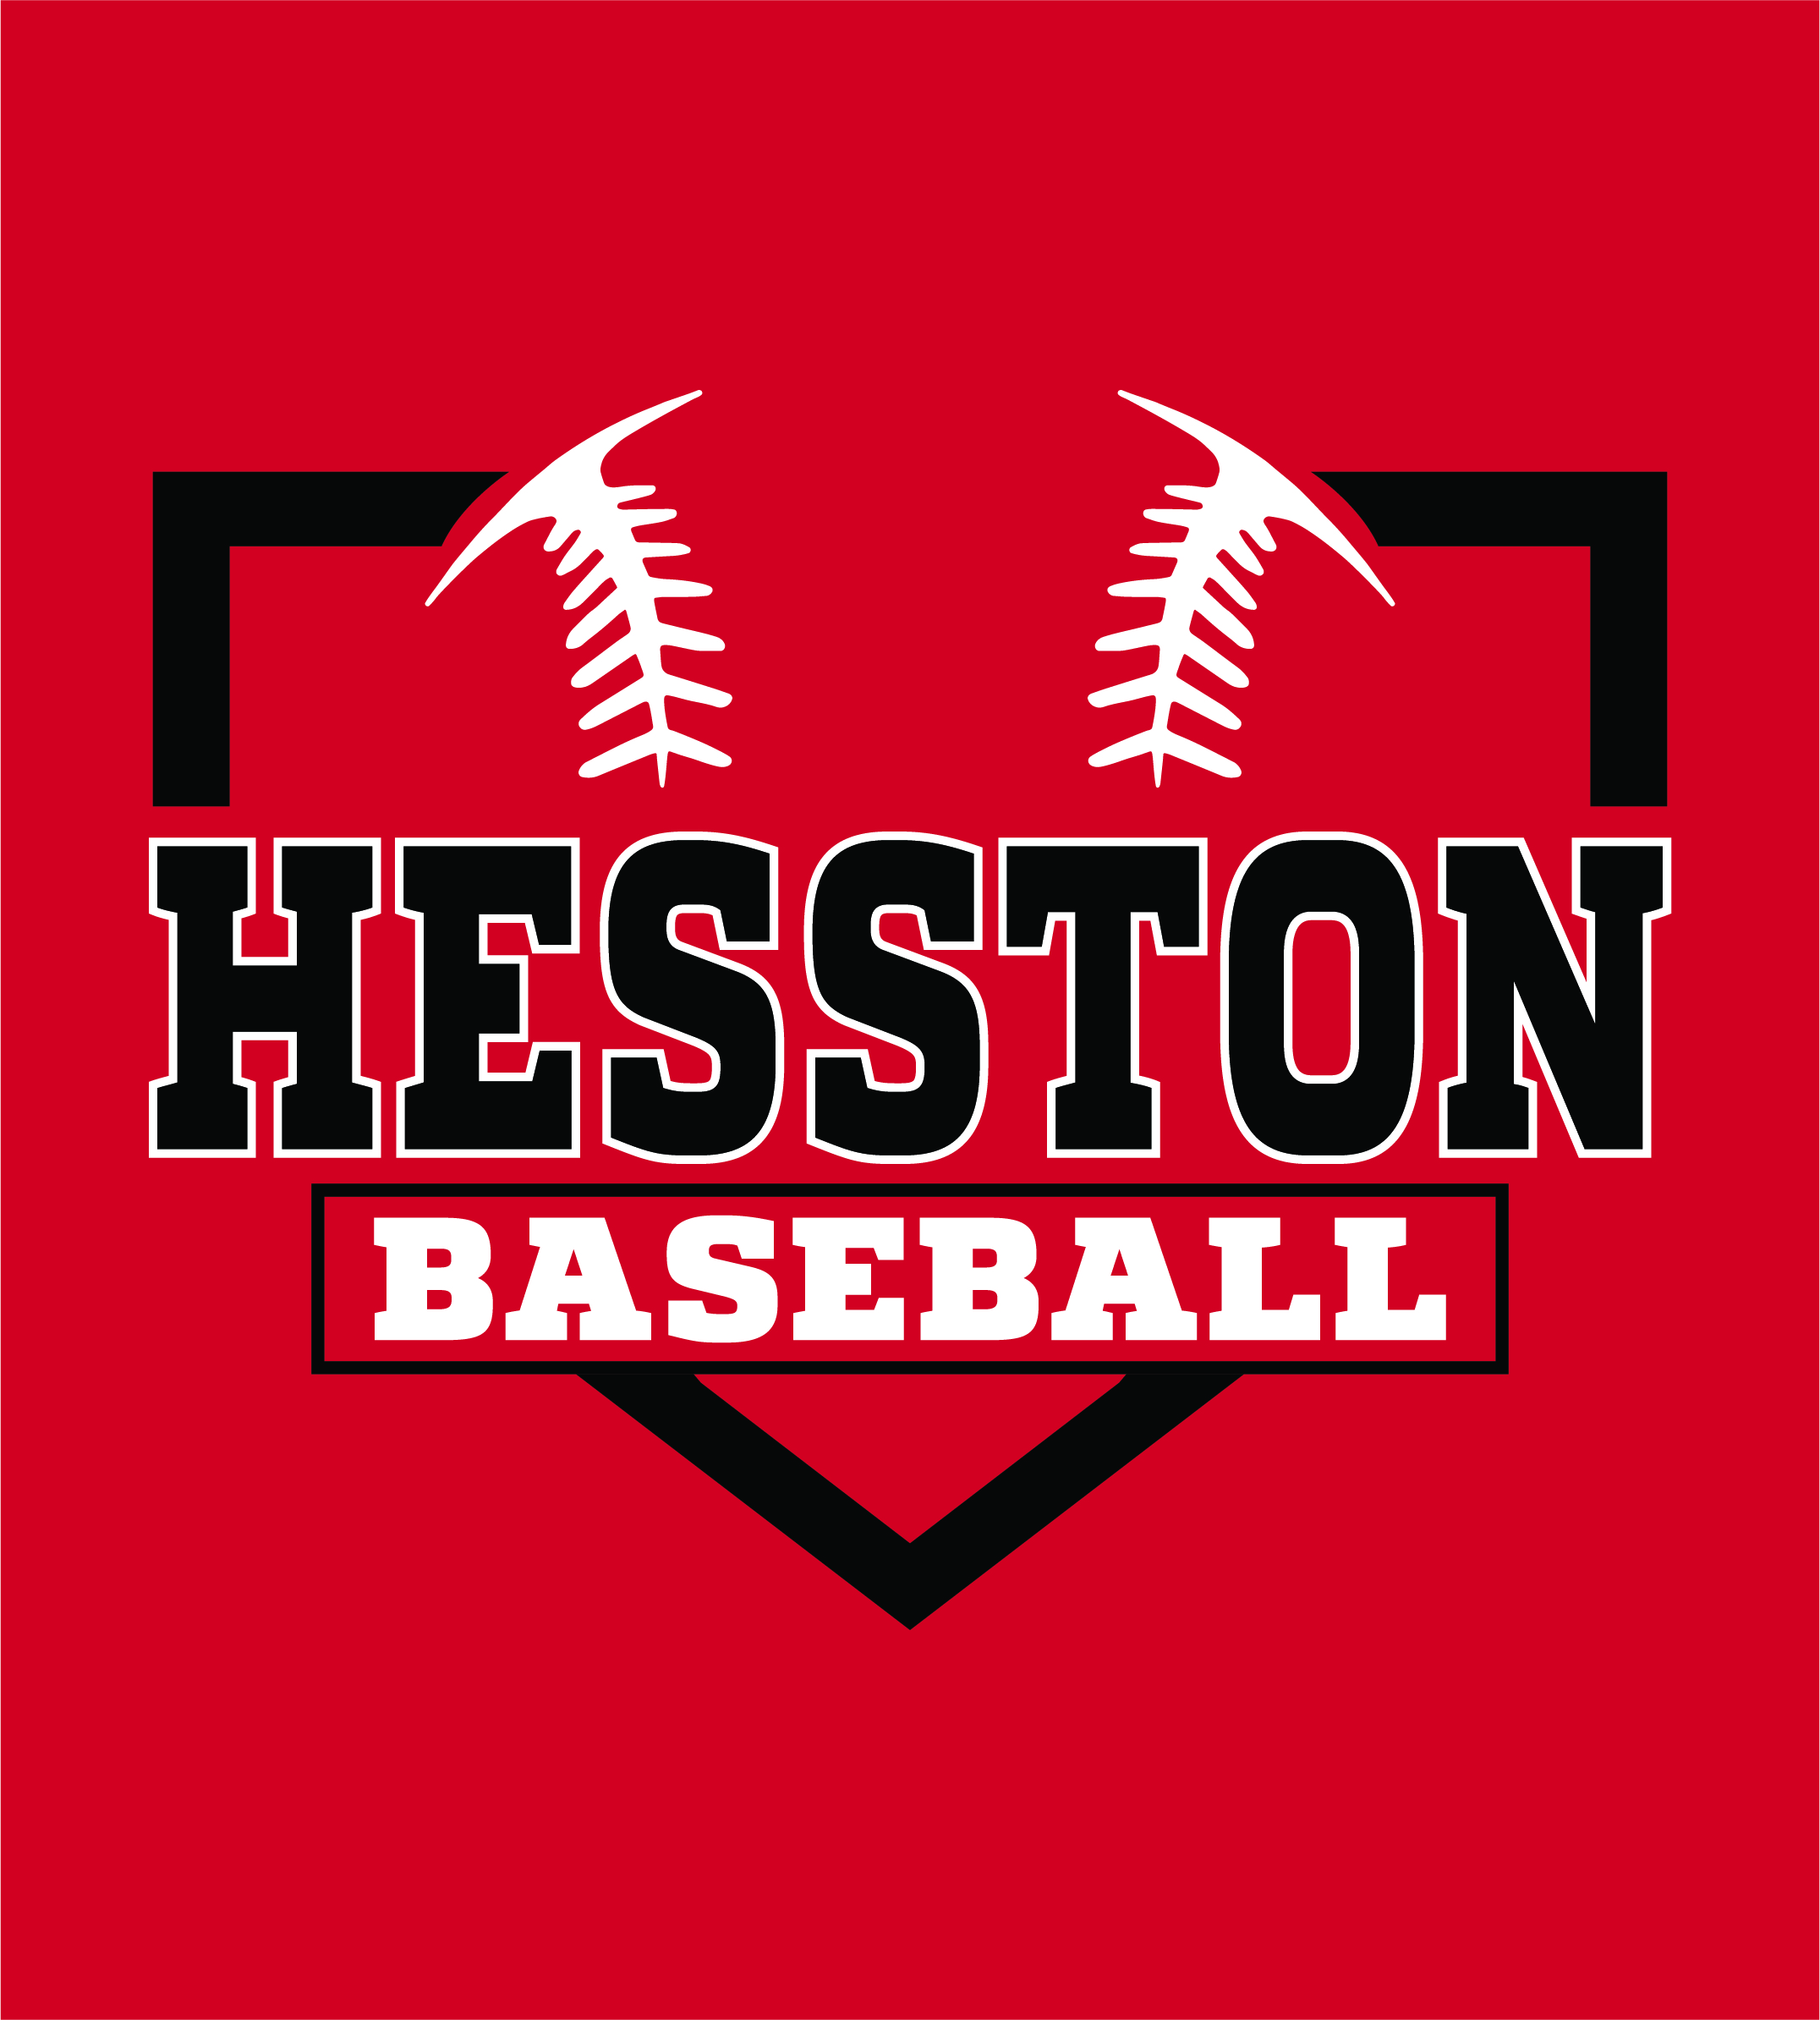 Hesston Youth Baseball